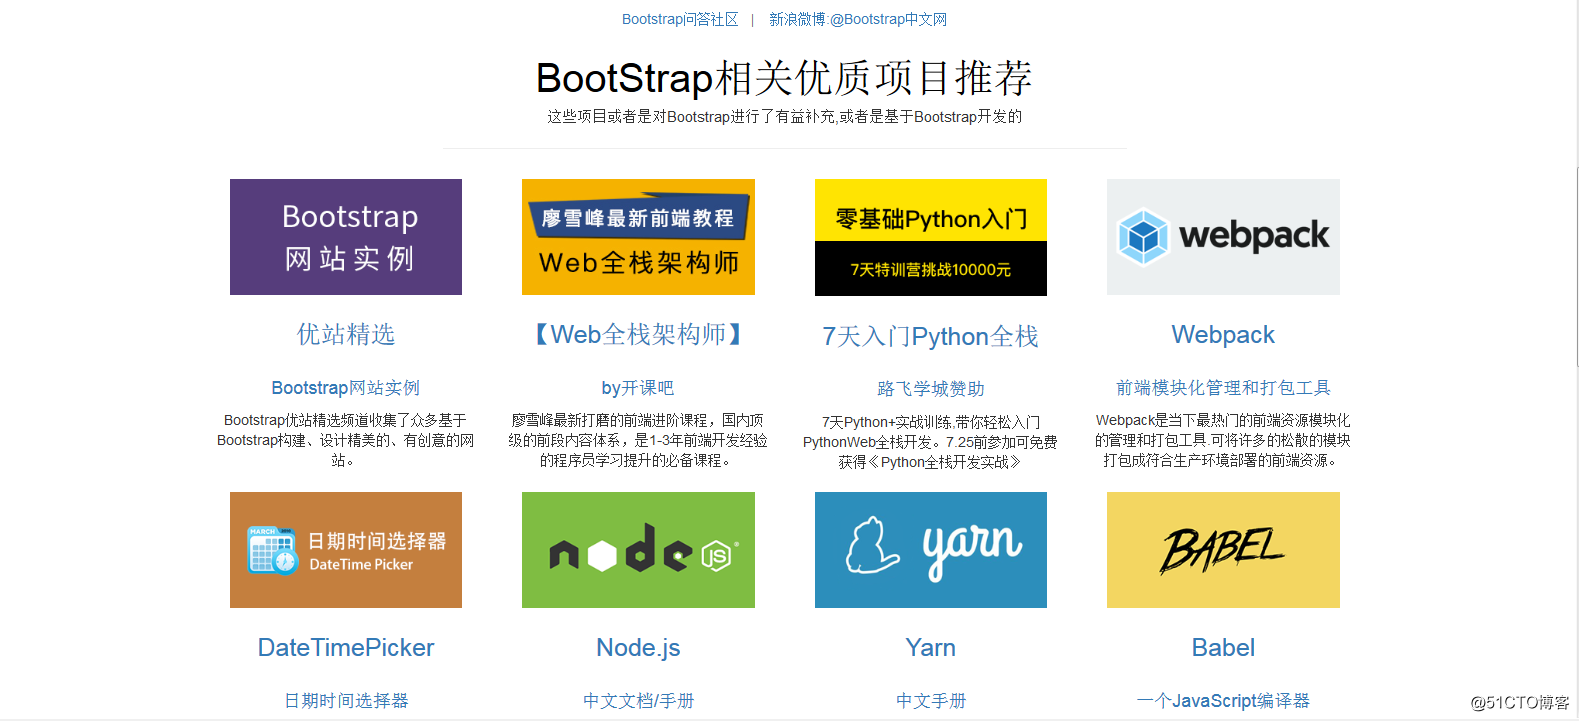 用Bootstrap知識寫簡易版Bootstrap官方網站首頁